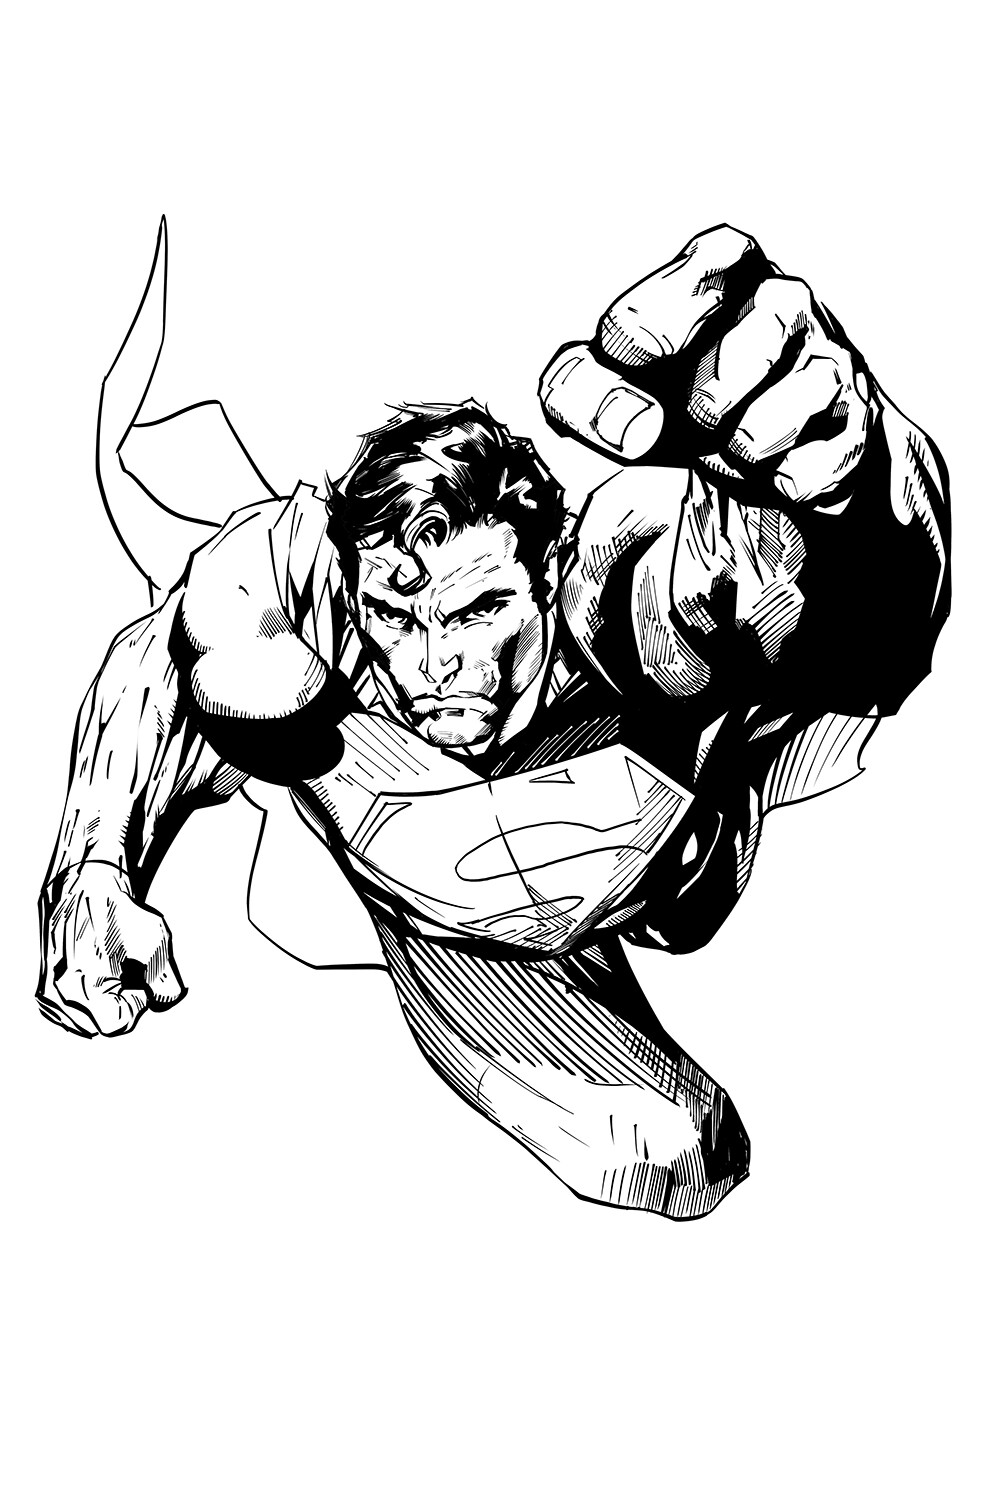 Superman Unchained #2 art by Jim Lee. | Jim lee art, Superman art, Batman  comic art